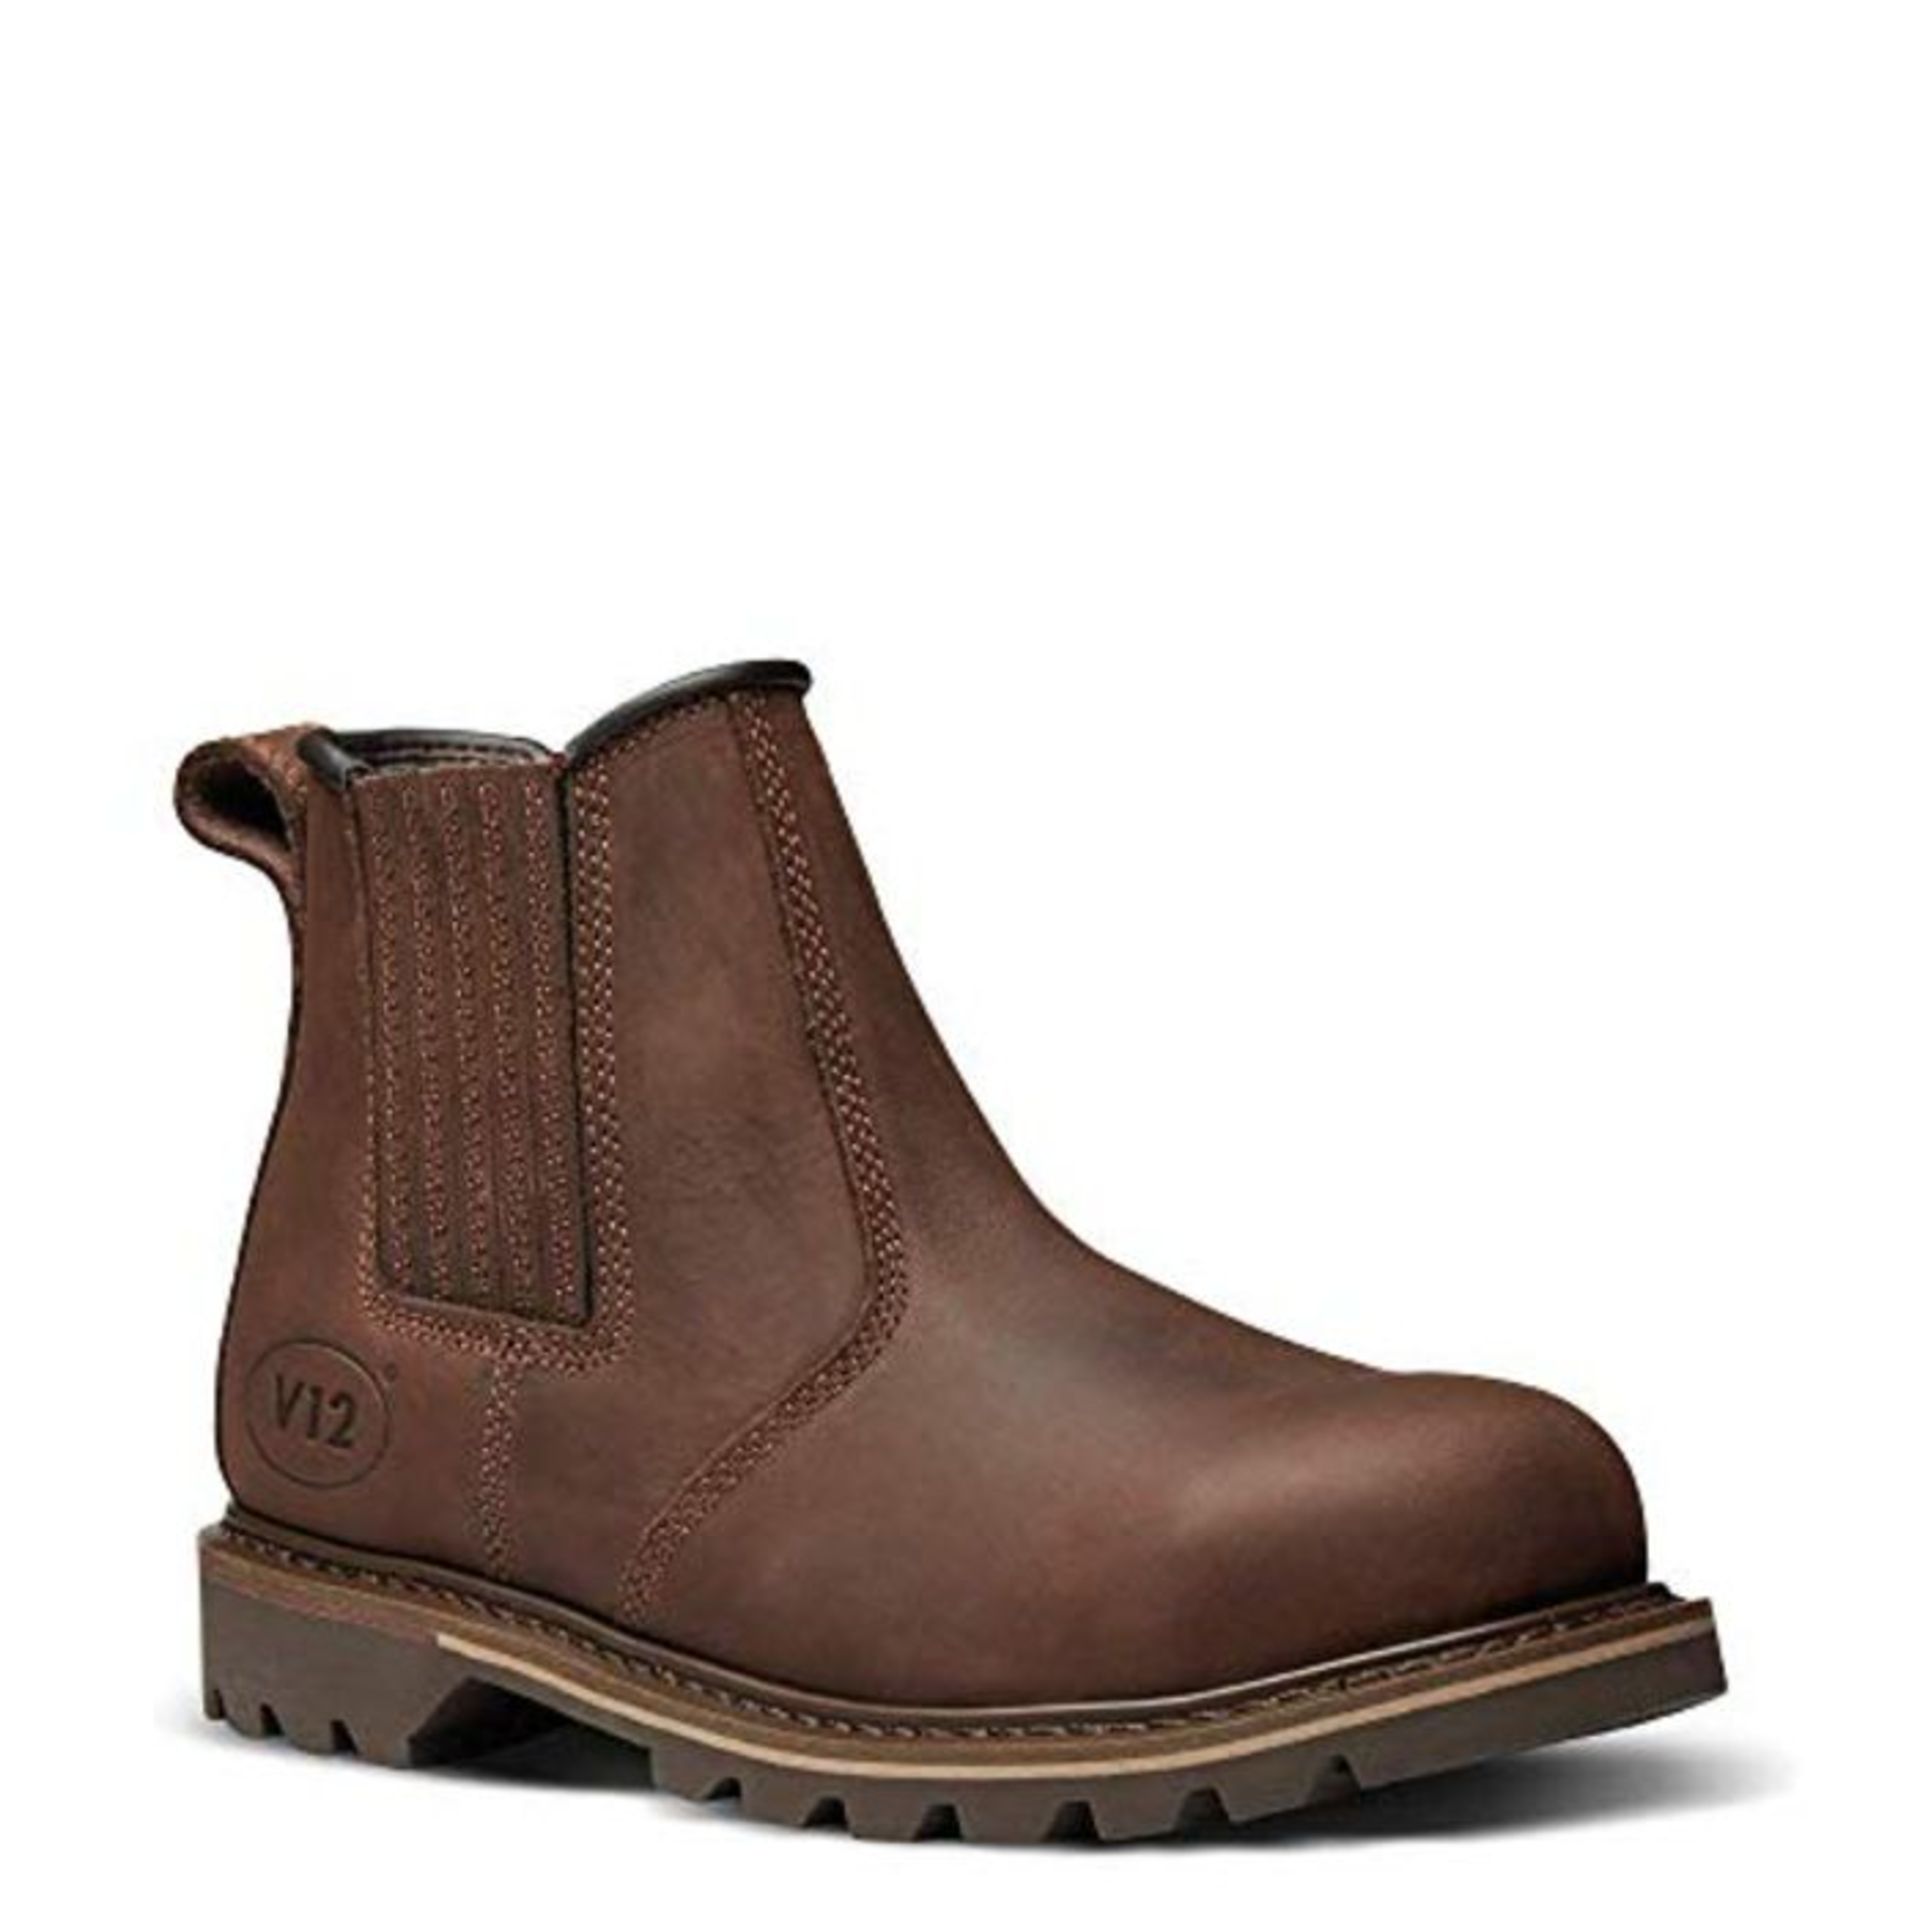 RRP £69.00 V12 Rawhide, Full Grain Leather Safety Dealer Boot, Size 12, Brown